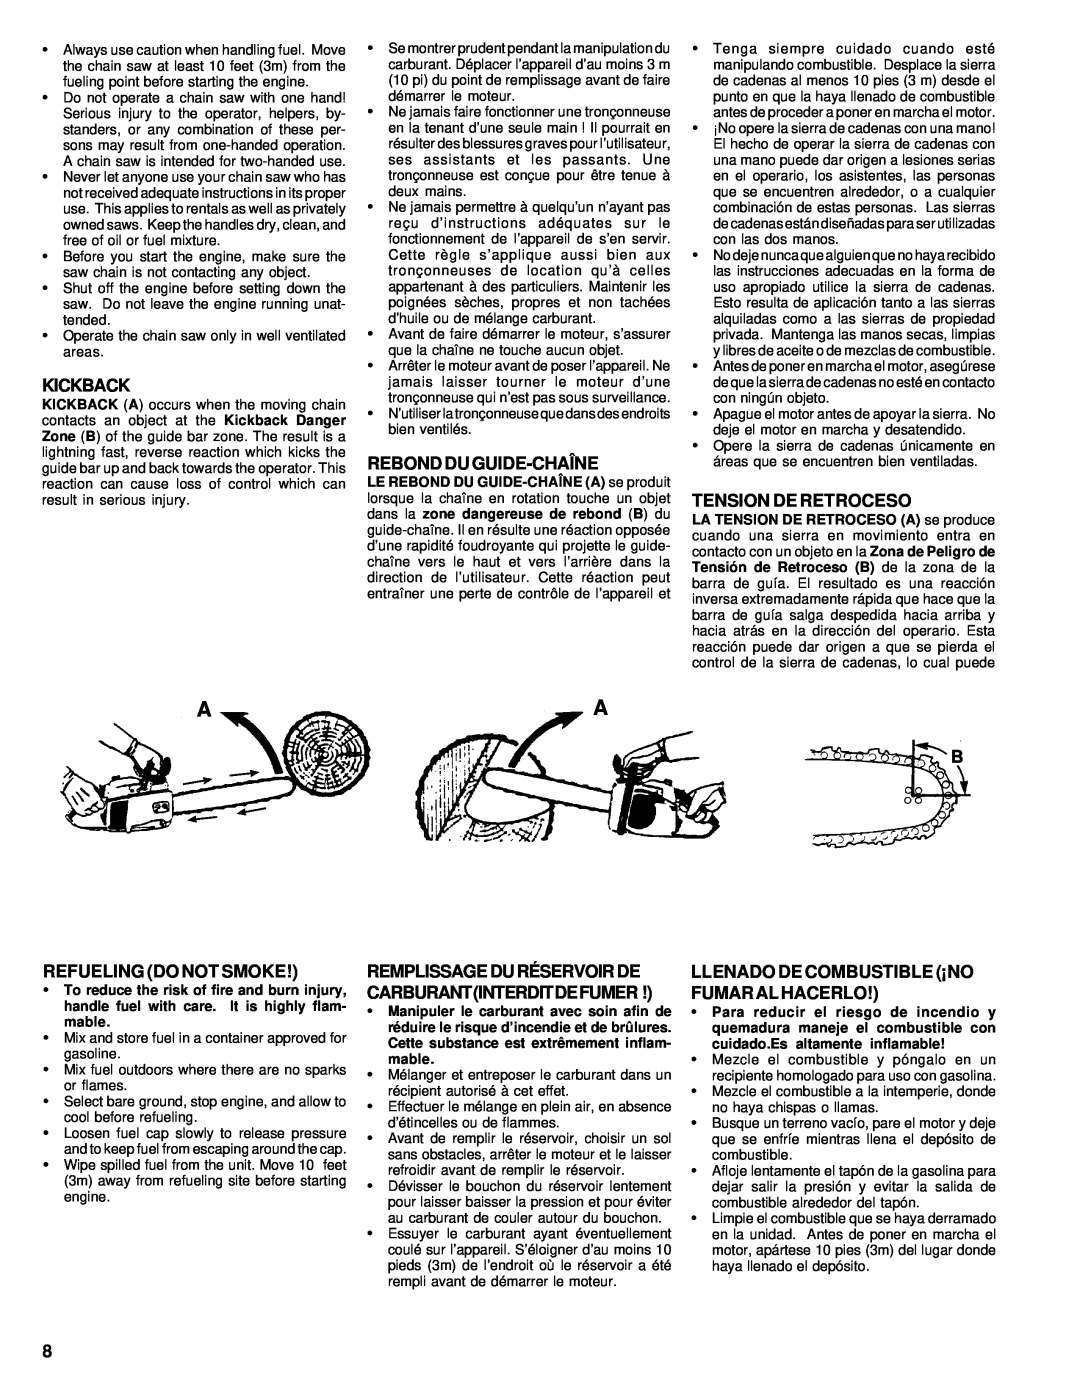 Homelite UT74020 manual Rebond Du Guide-Chaîne, Tension De Retroceso, Refueling Do Not Smoke, Kickback 